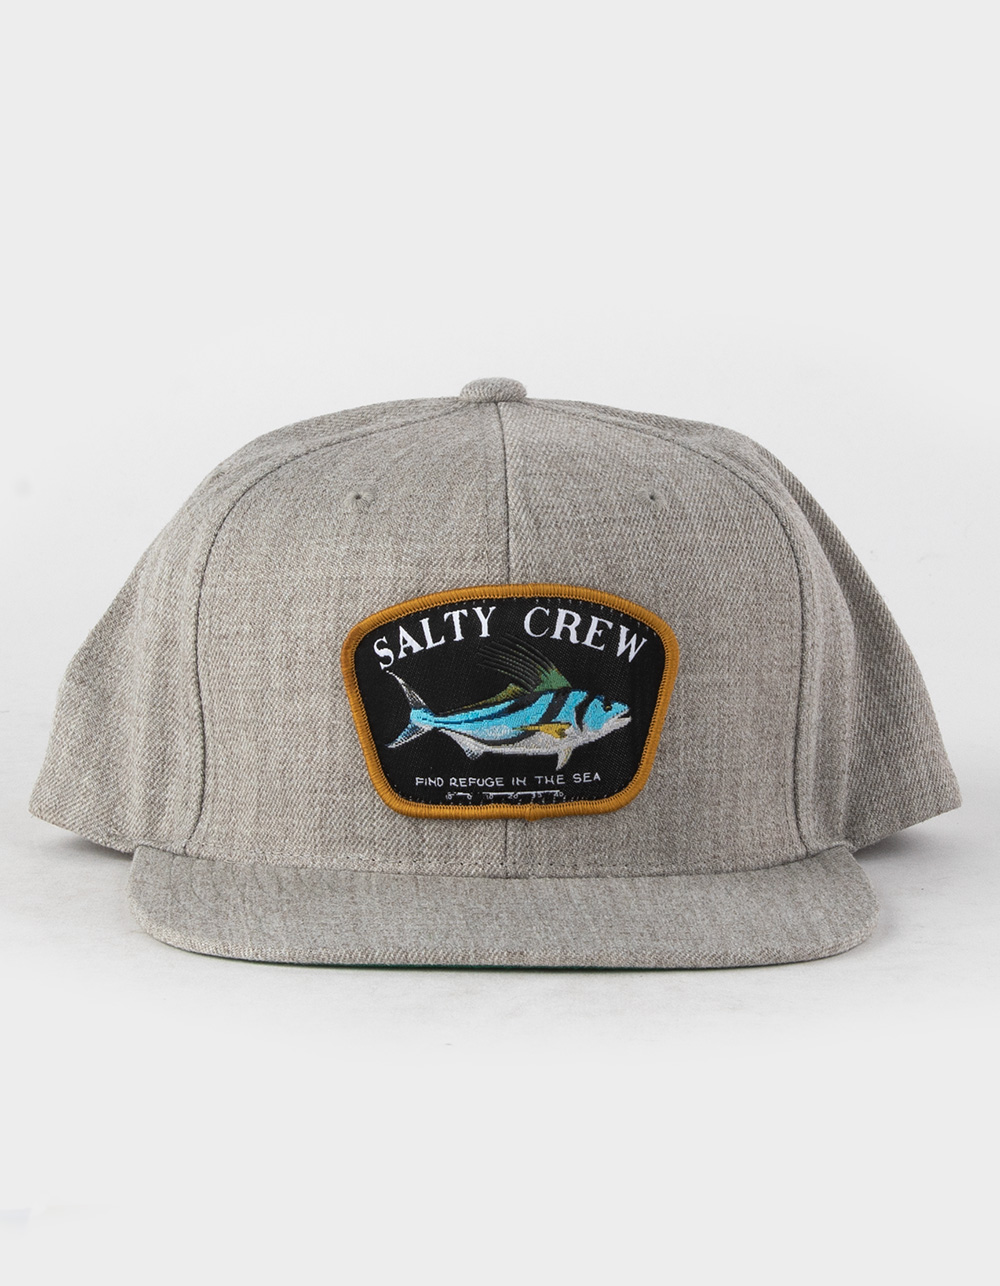 SALTY CREW Rooster 6 Panel Mens Snapback Hat - NATURAL | Tillys